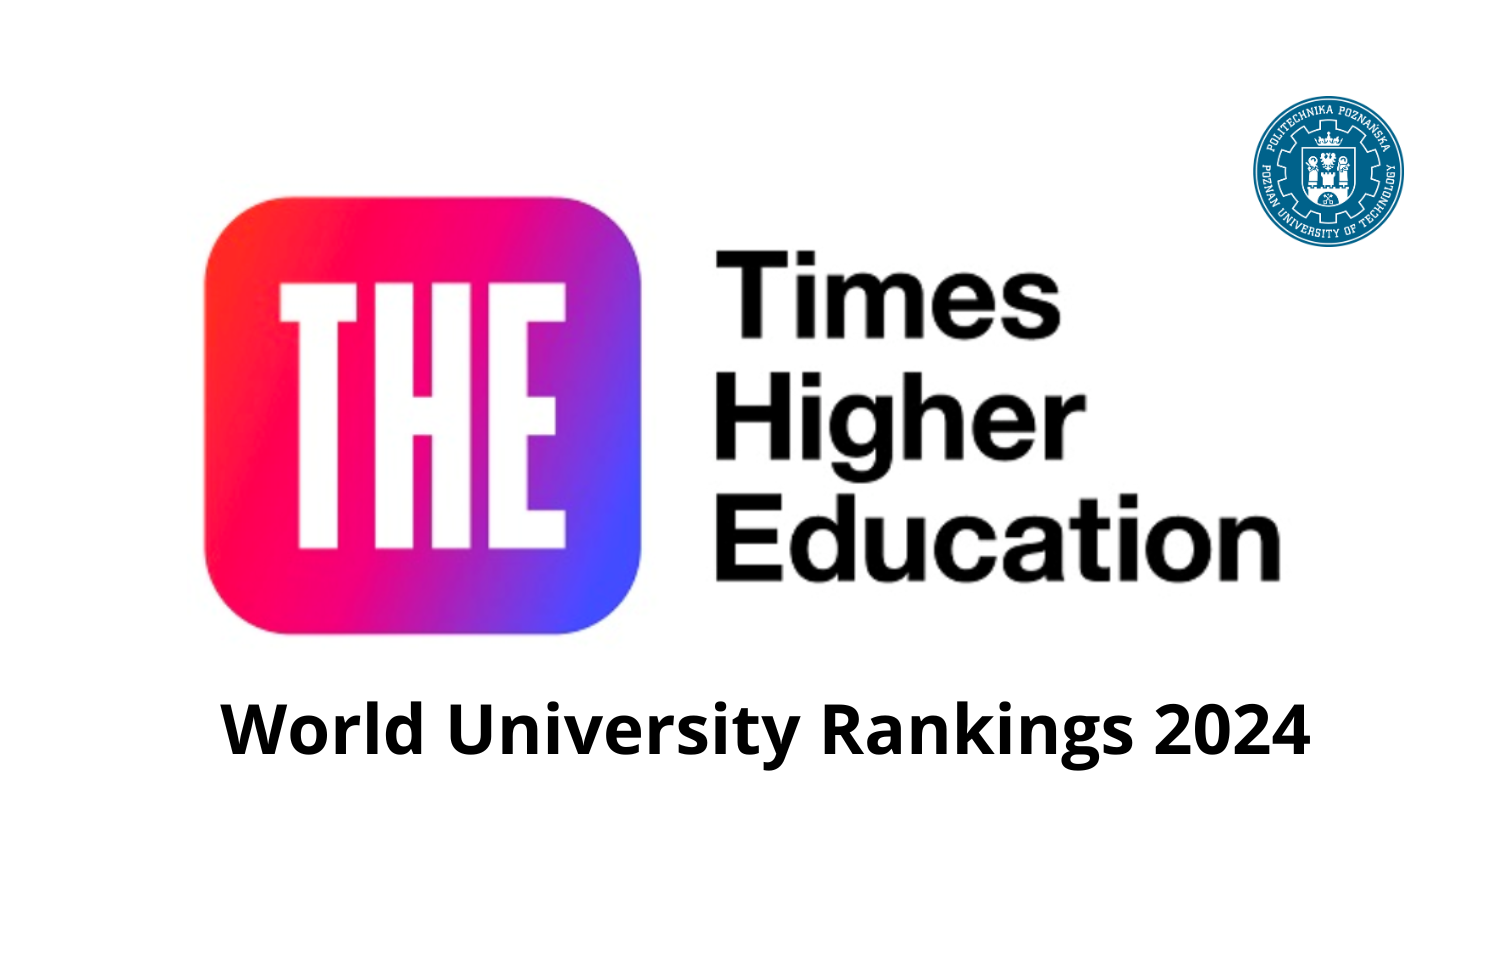 World University Rankings 2024 